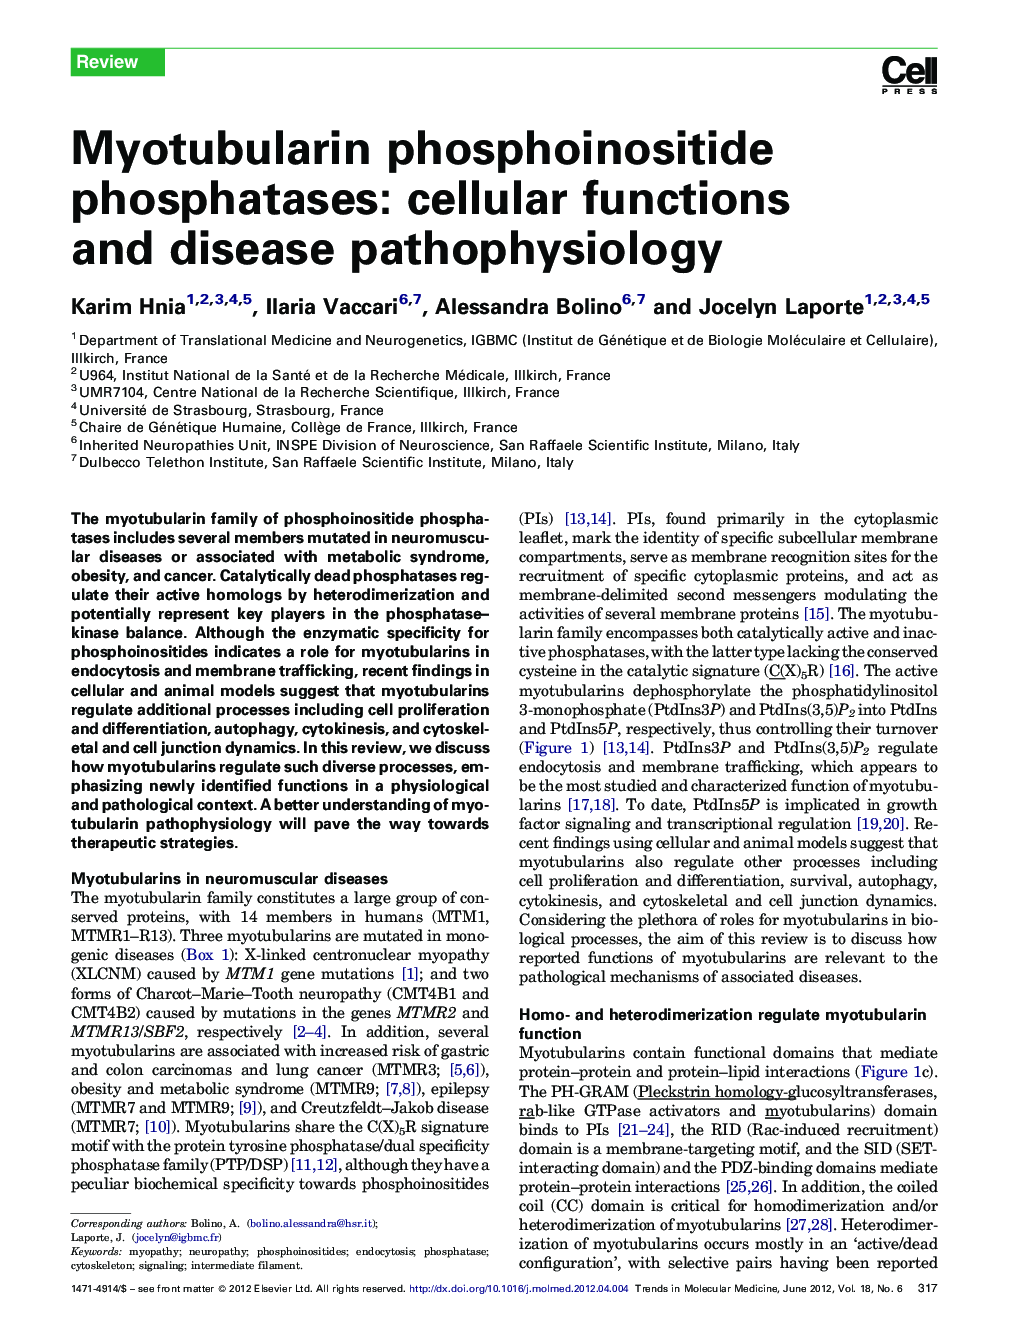 Myotubularin phosphoinositide phosphatases: cellular functions and disease pathophysiology